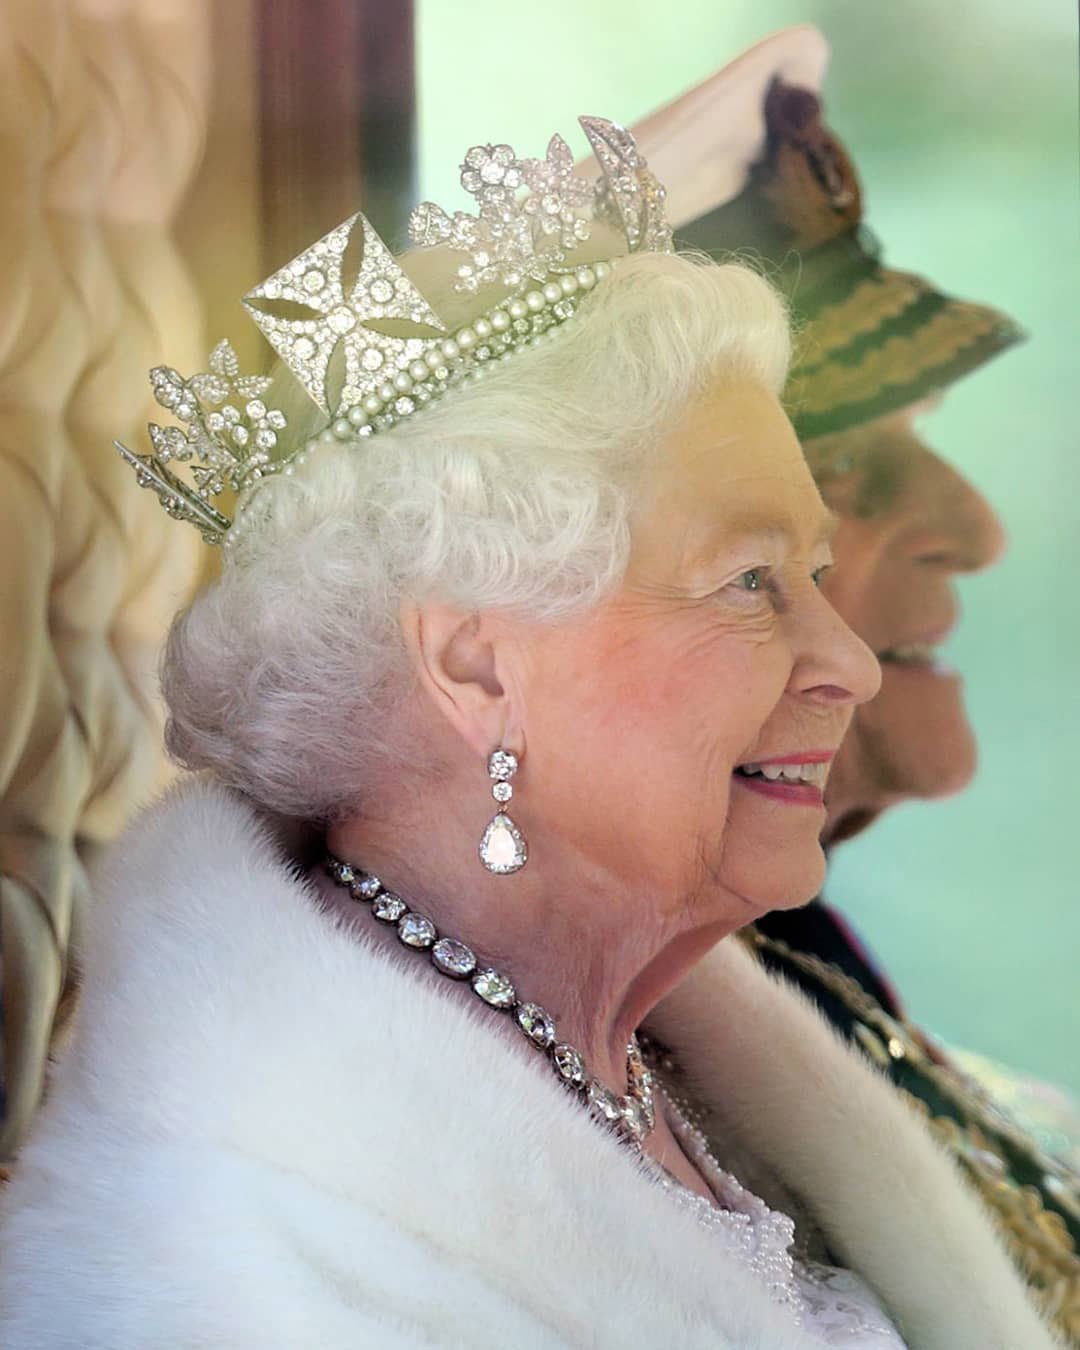 Fonte: Queen Elizabeth II/Instagram/Reprodução